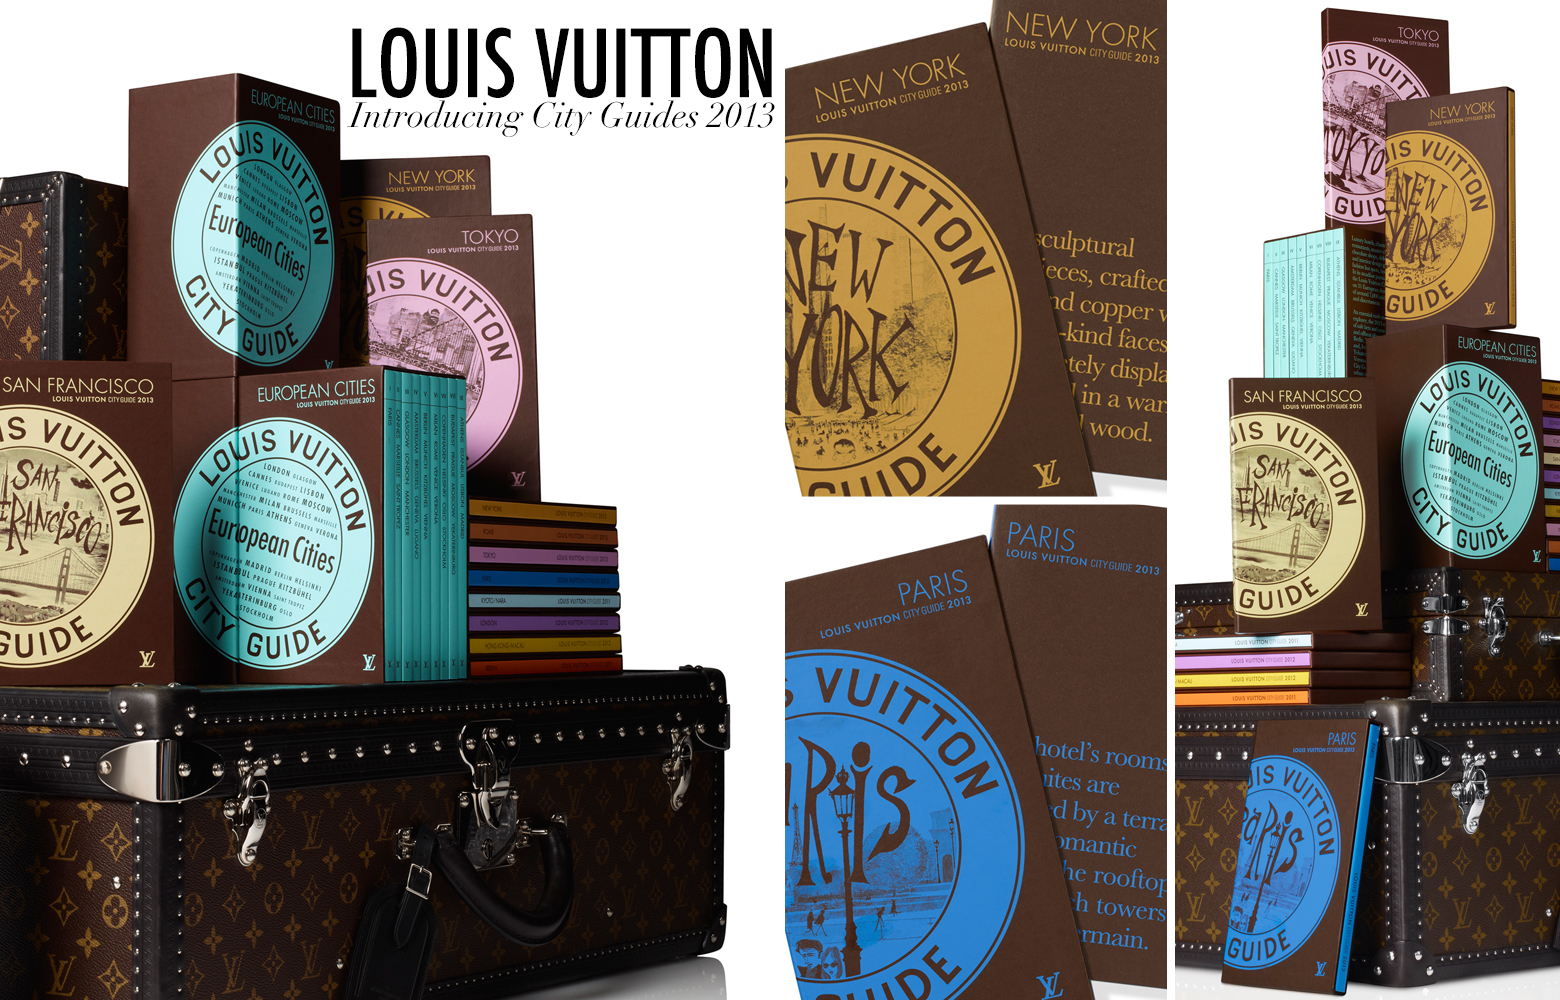 Janat recommended inside Louis Vuitton City Guide 2013, 2014, 2015